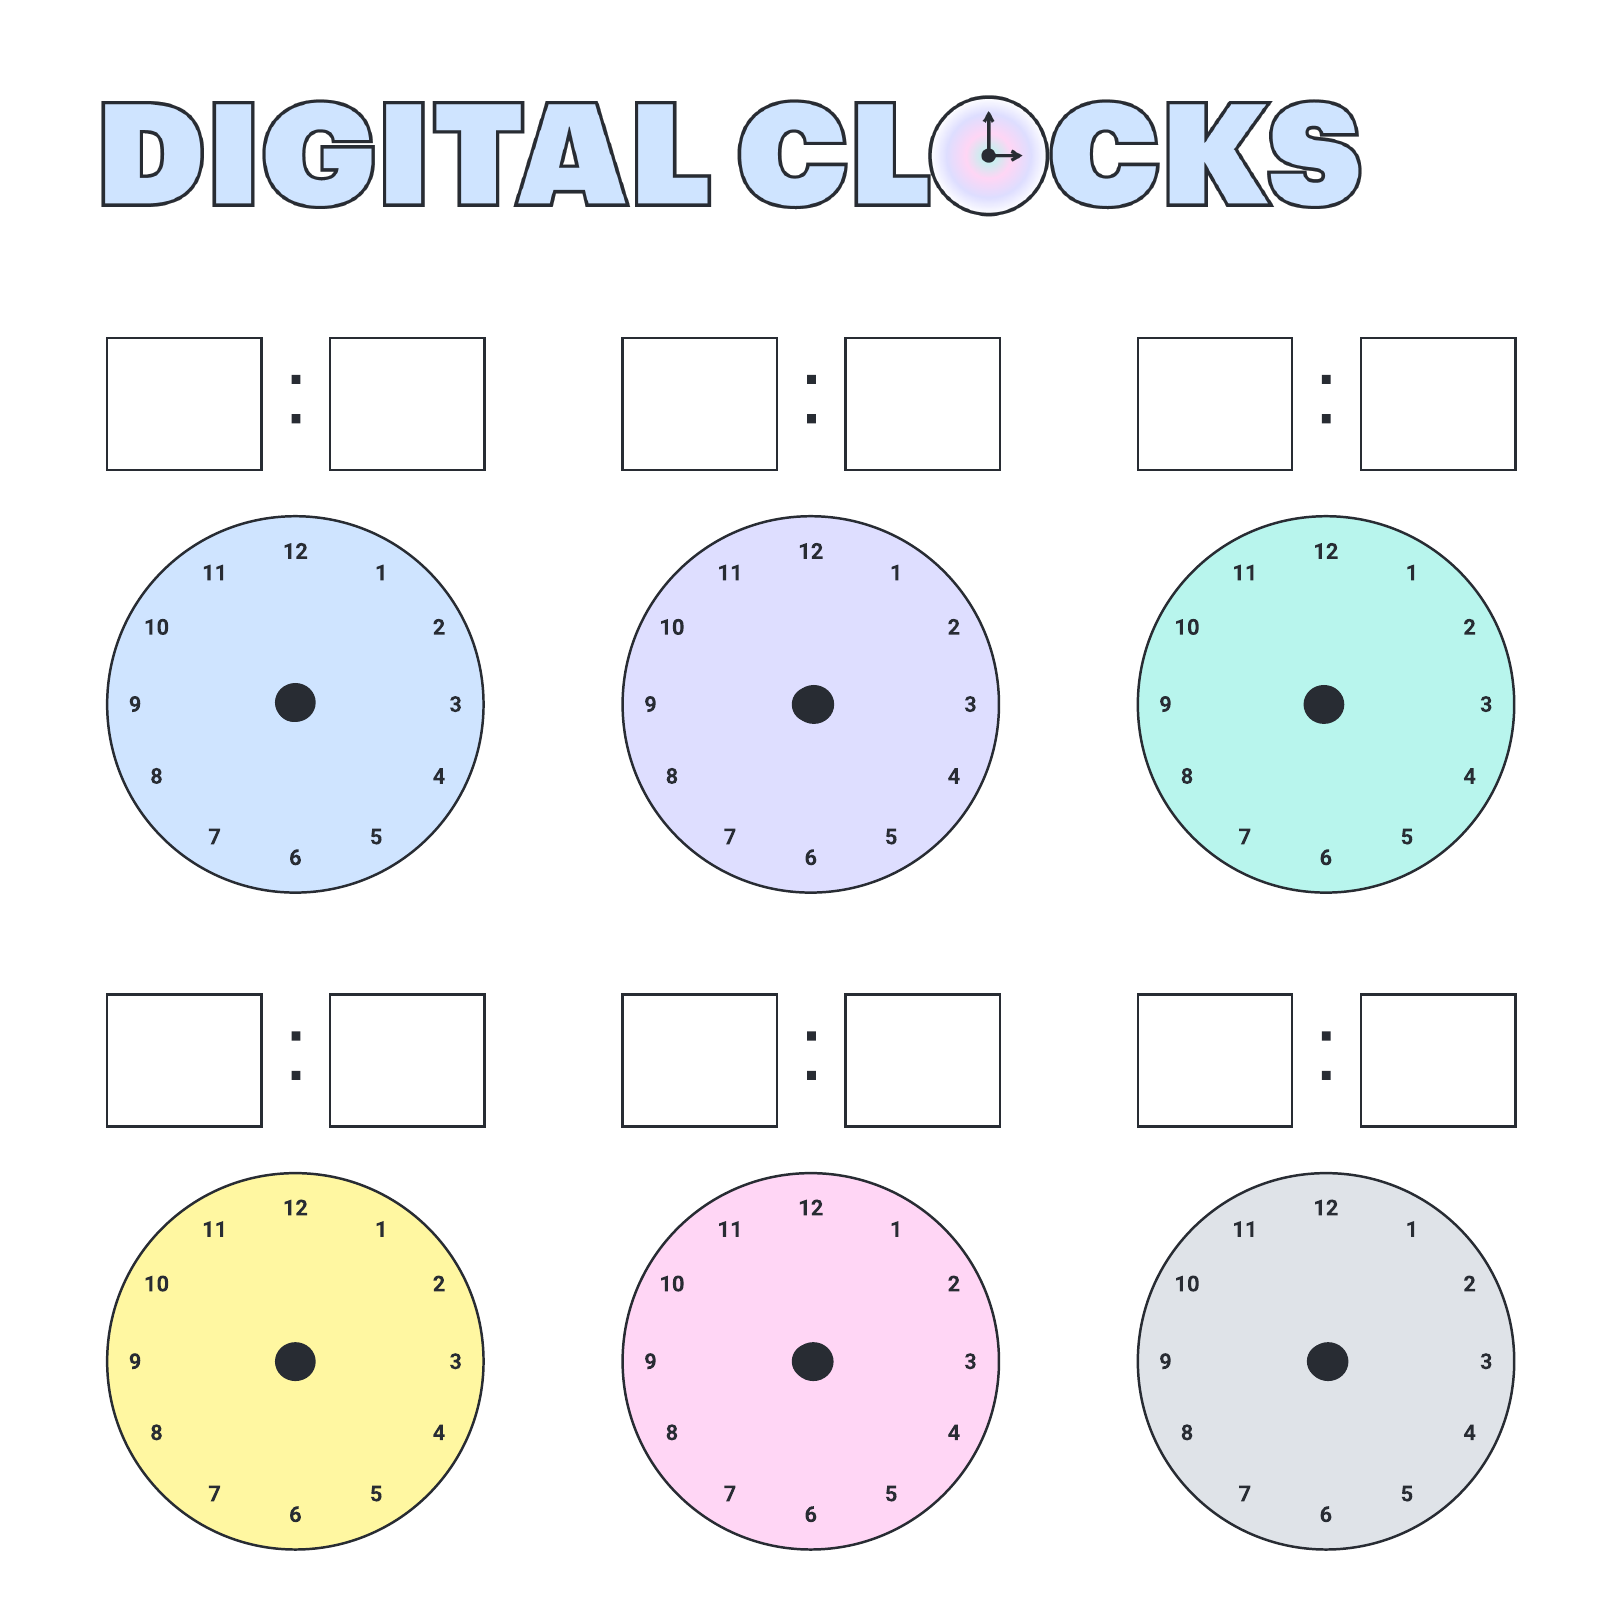 Digital clocks example